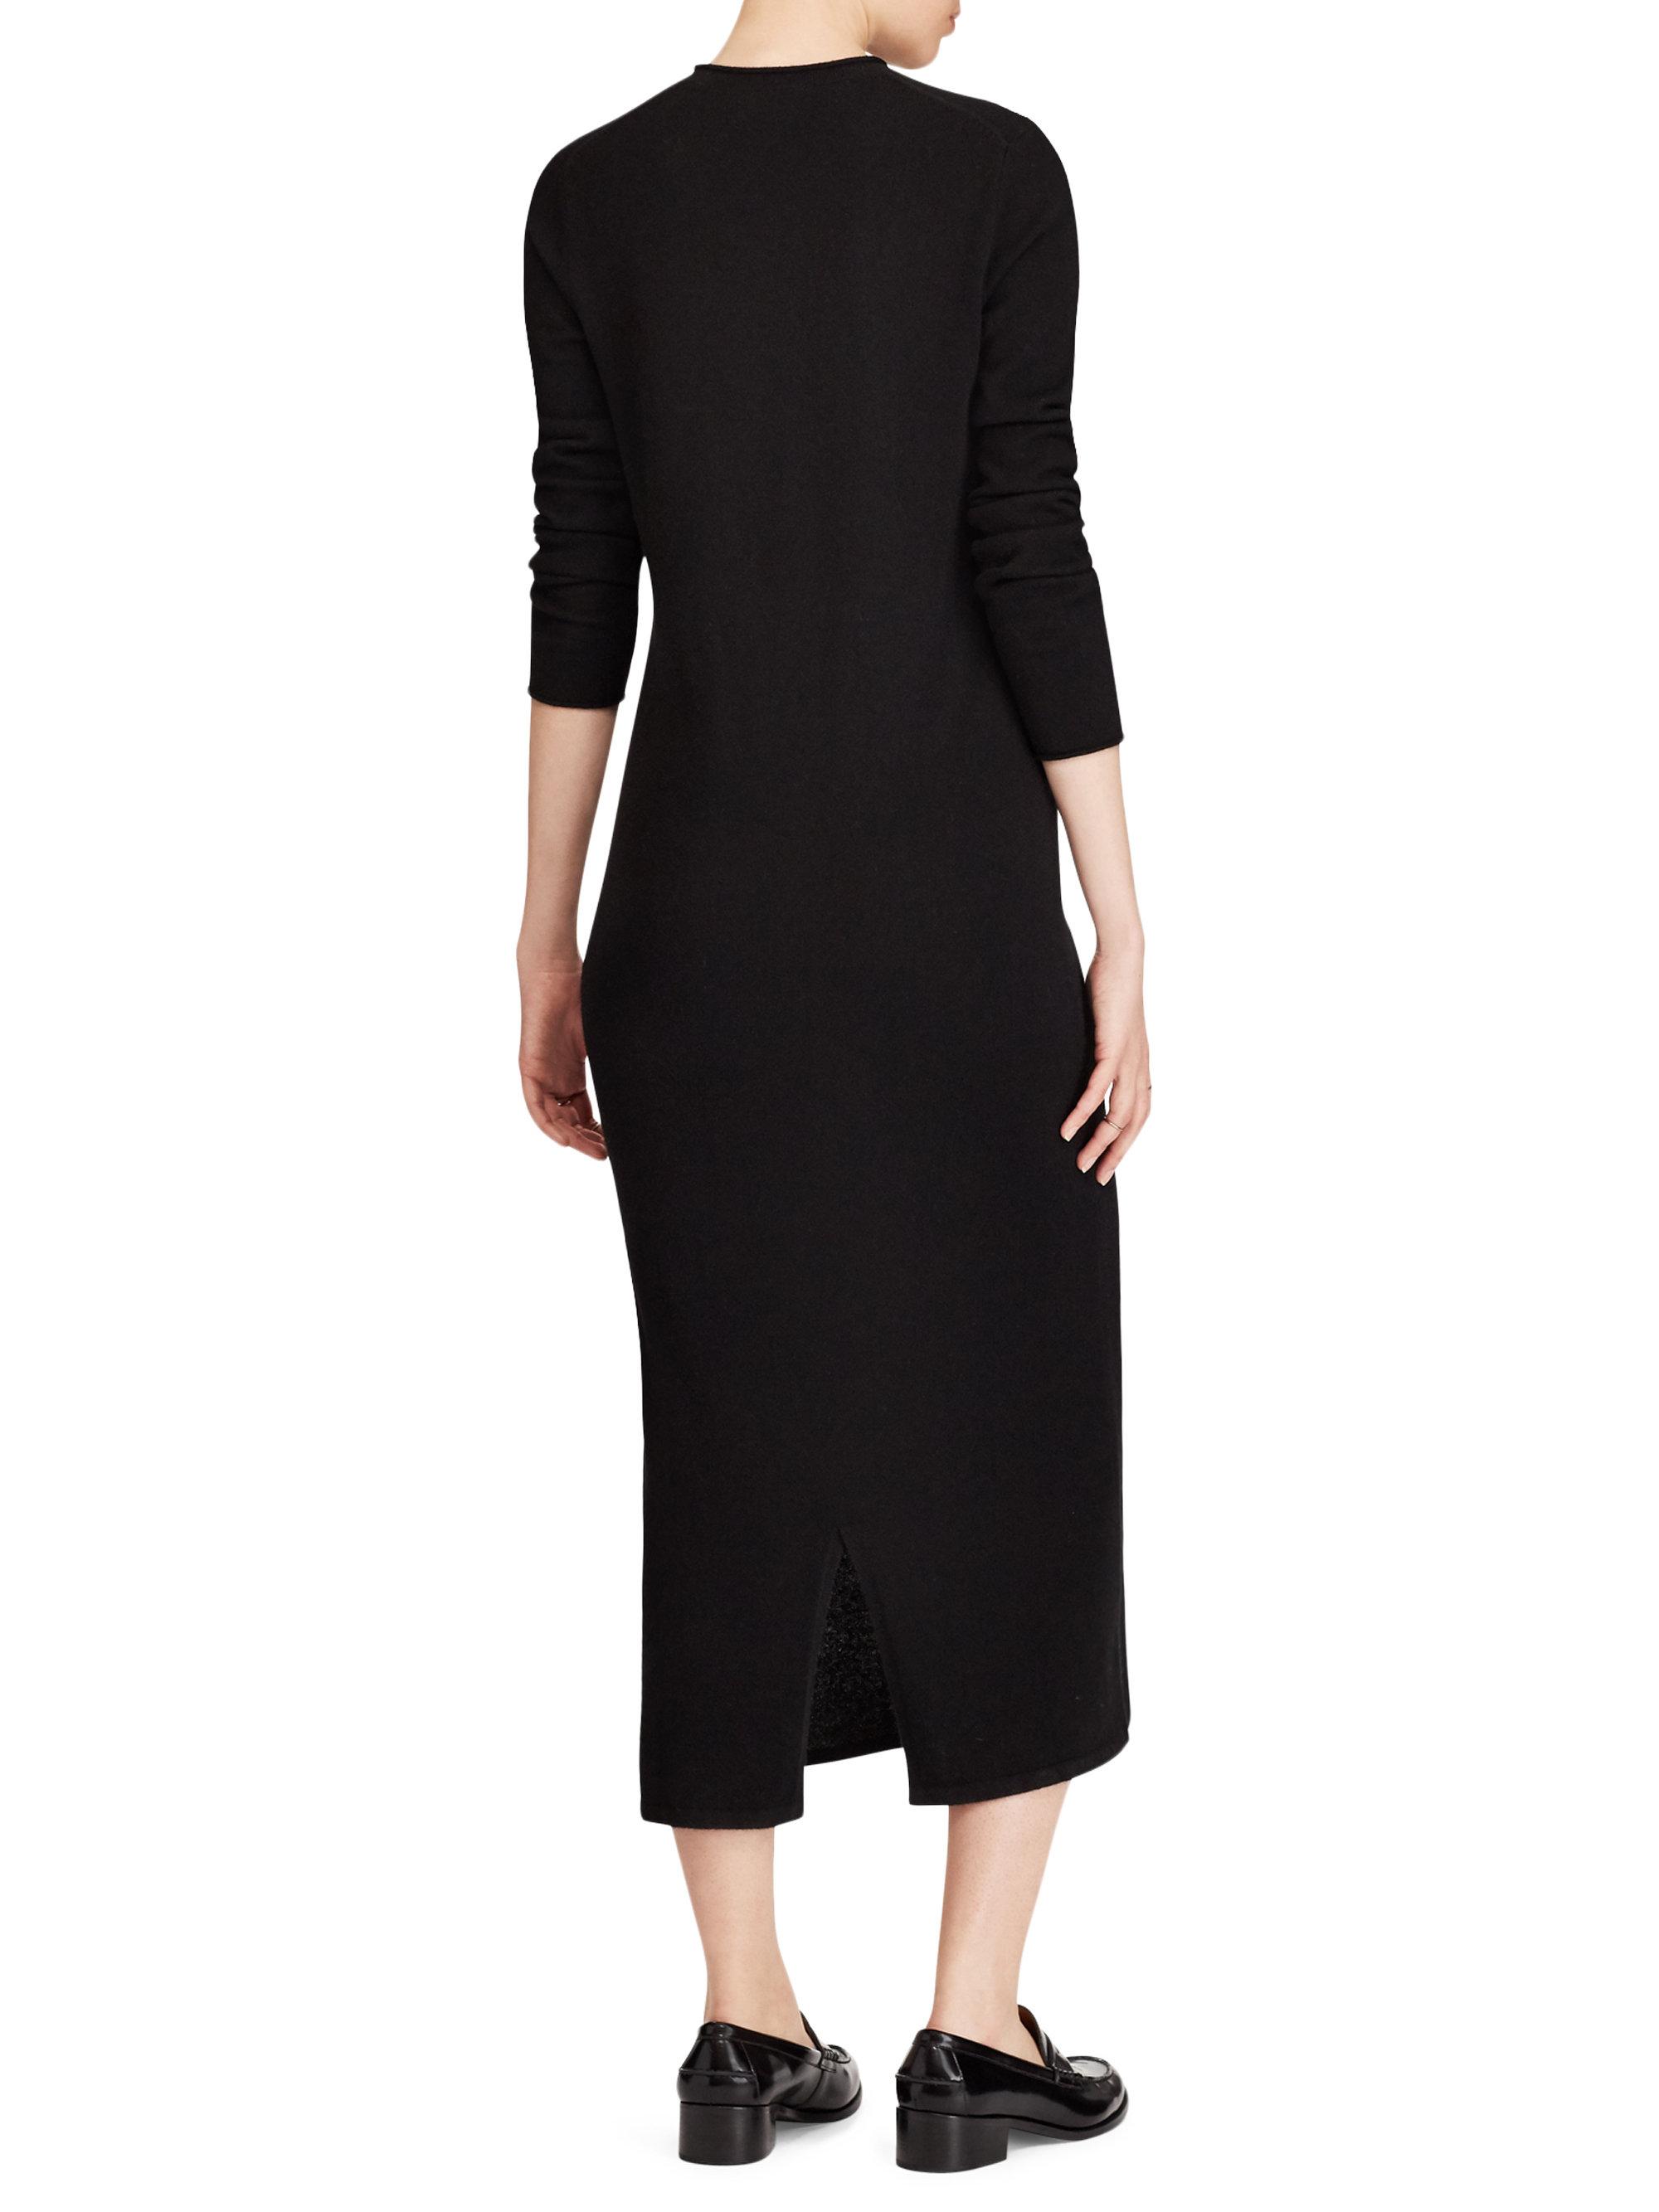 Lyst - Polo Ralph Lauren Long Cashmere Dress in Black